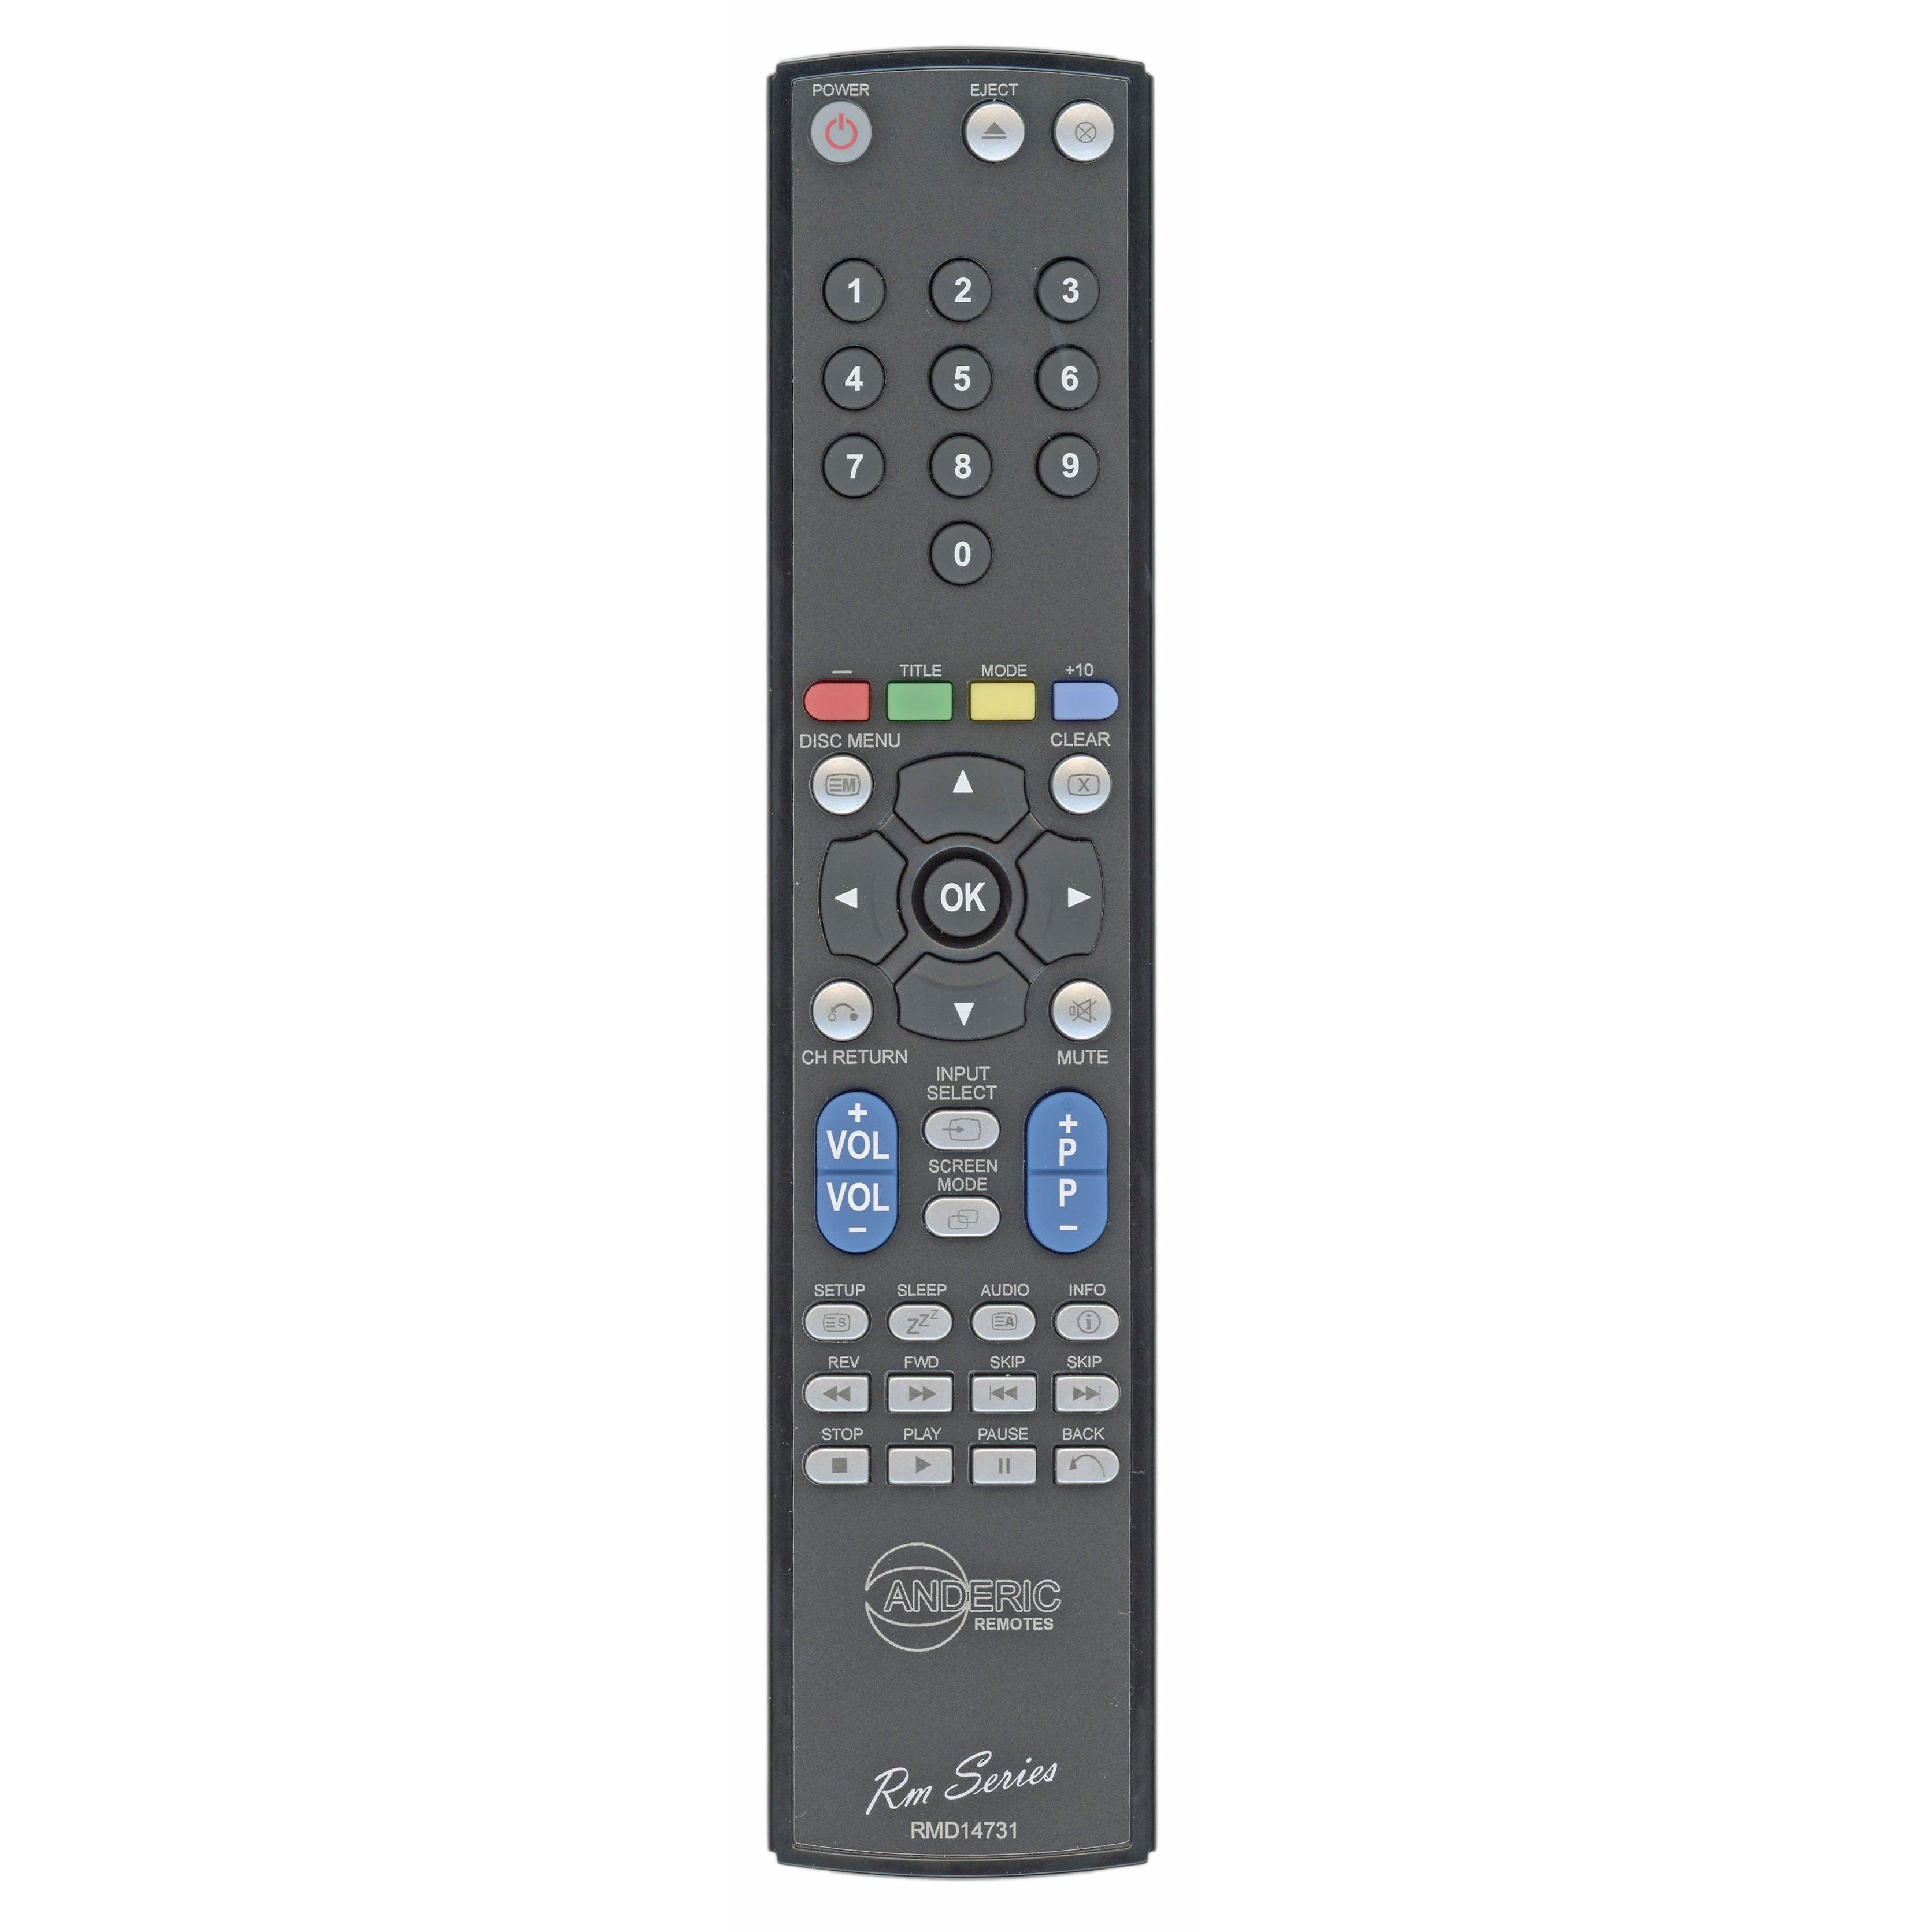 RR033UD Remote Control for Funai®, Sylvania®, Durabrand®, Magnasonic®, Emerson® TV & TV/DVD Players